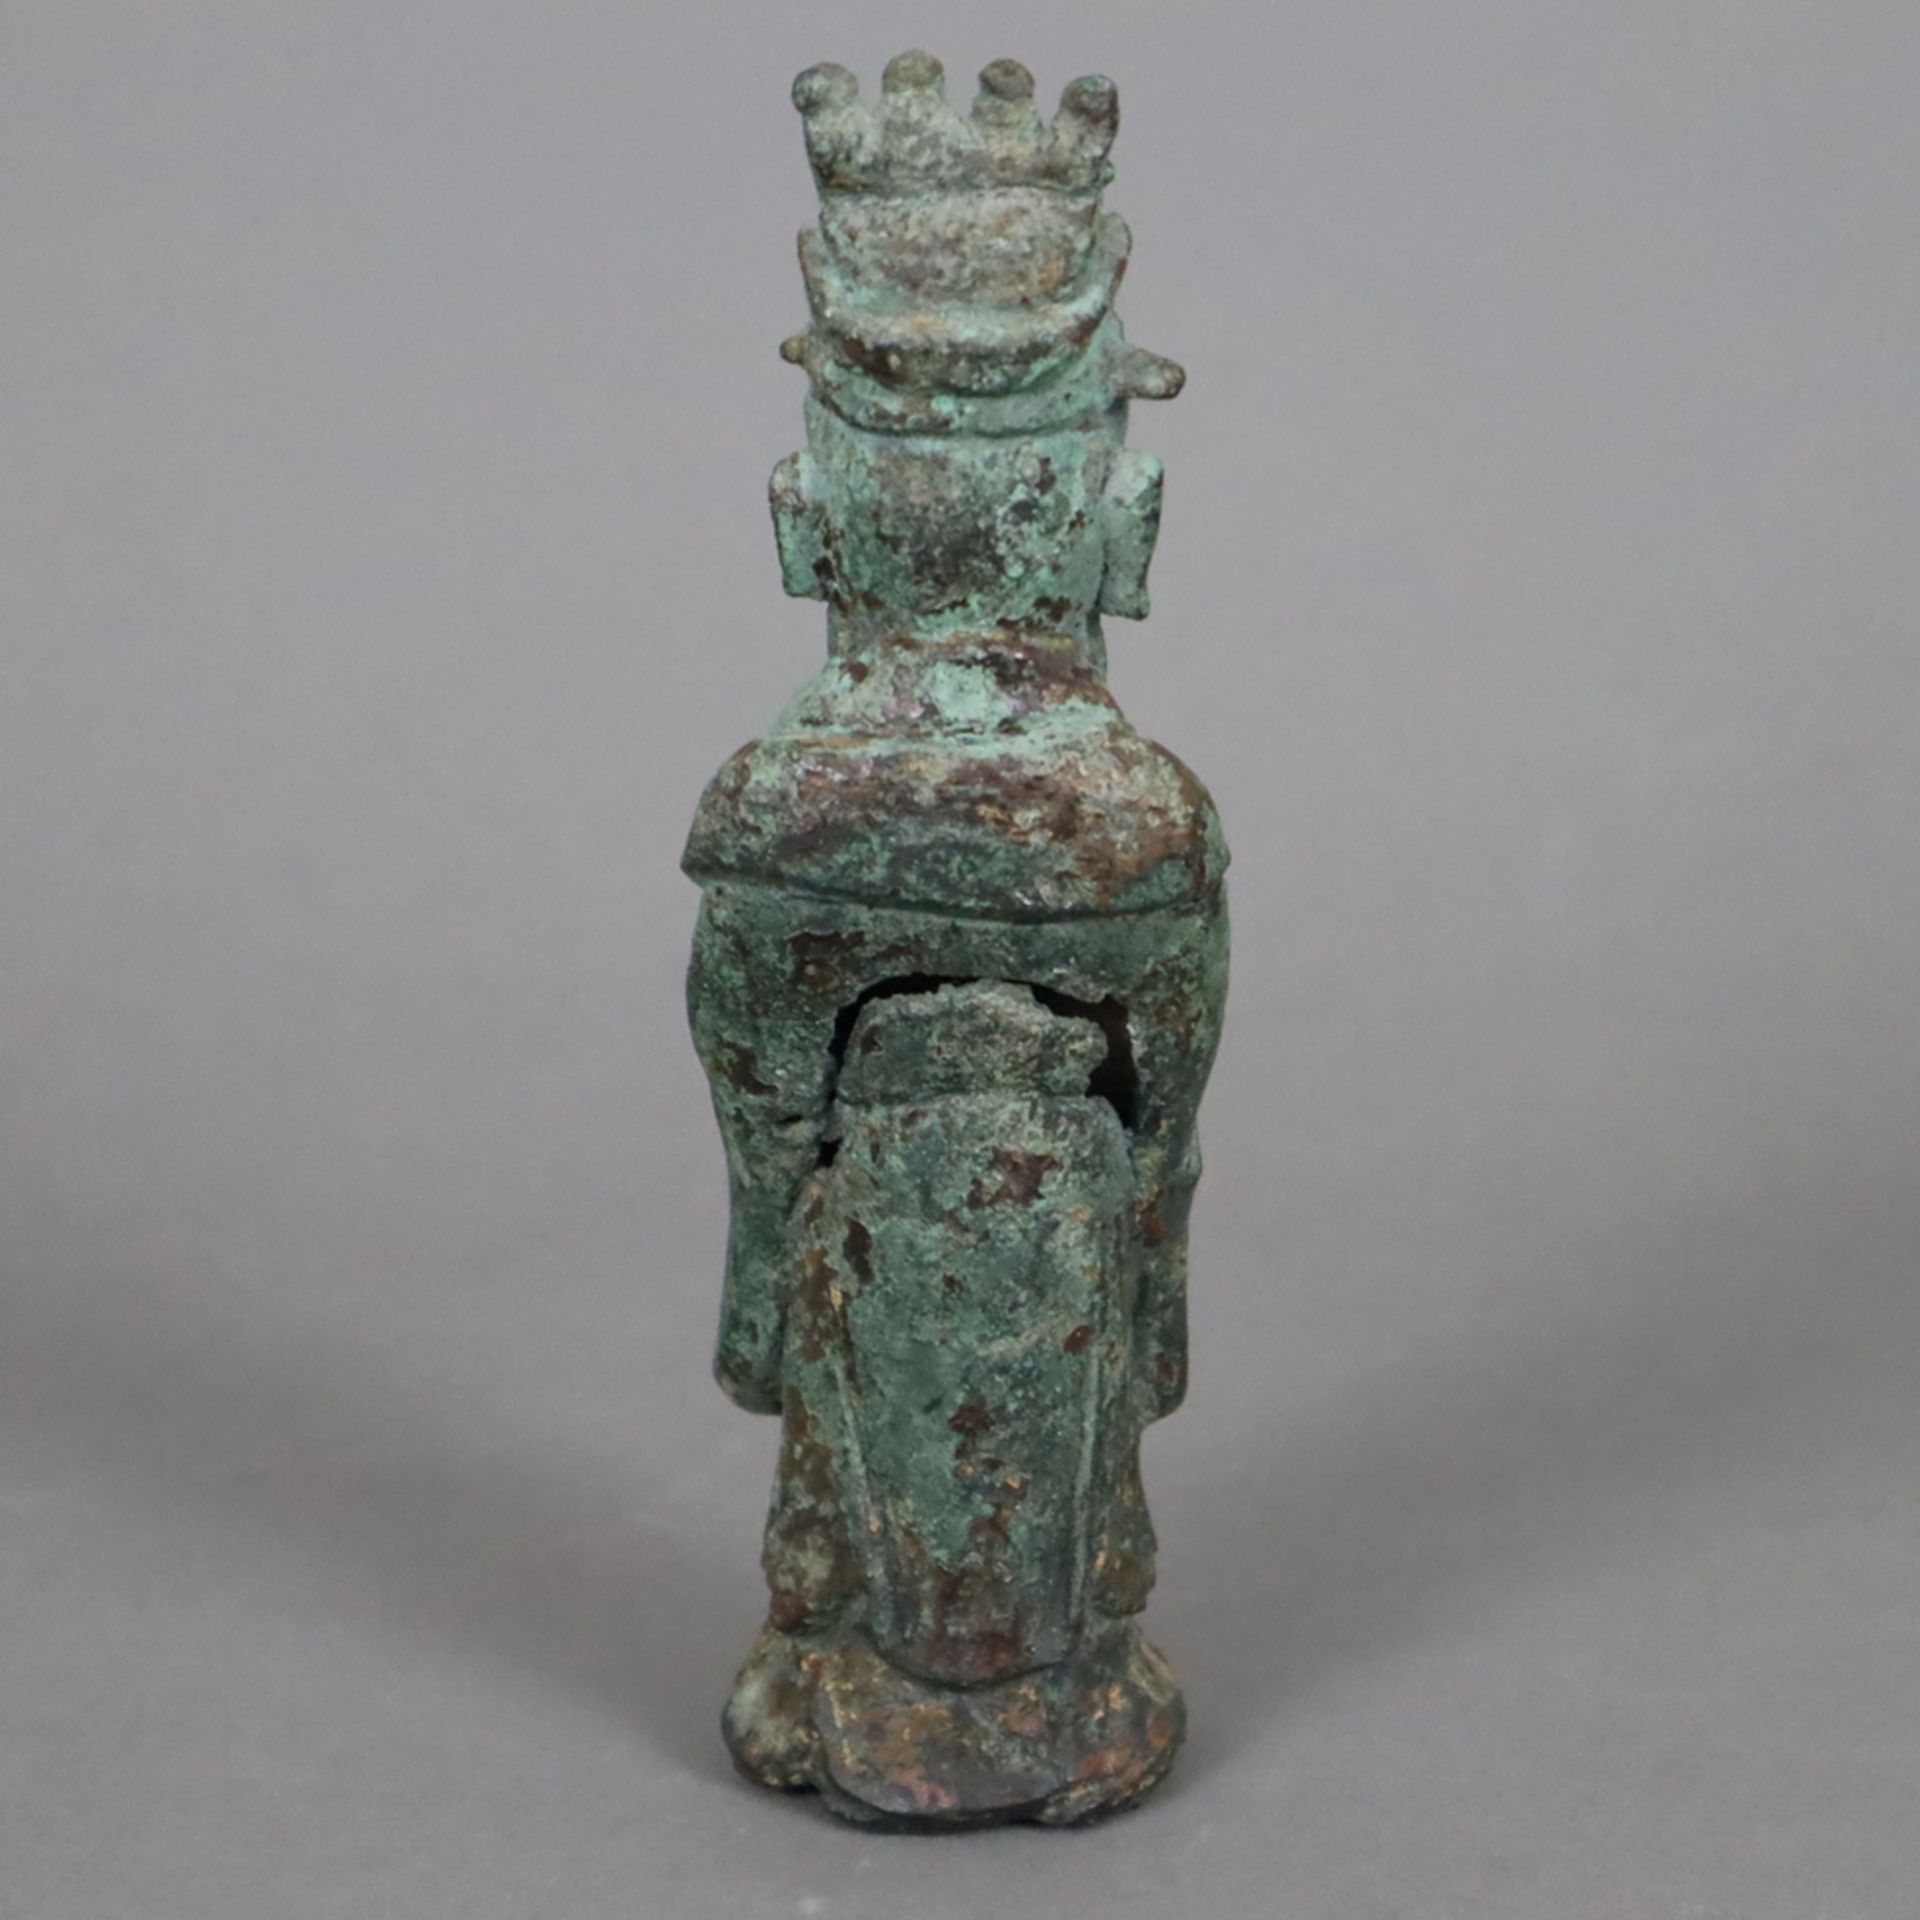 Würdenträger - China, Qing-Dynastie, Bronze mit grüner Patina, am Stand Befestigungsvorrichtung, of - Image 7 of 9